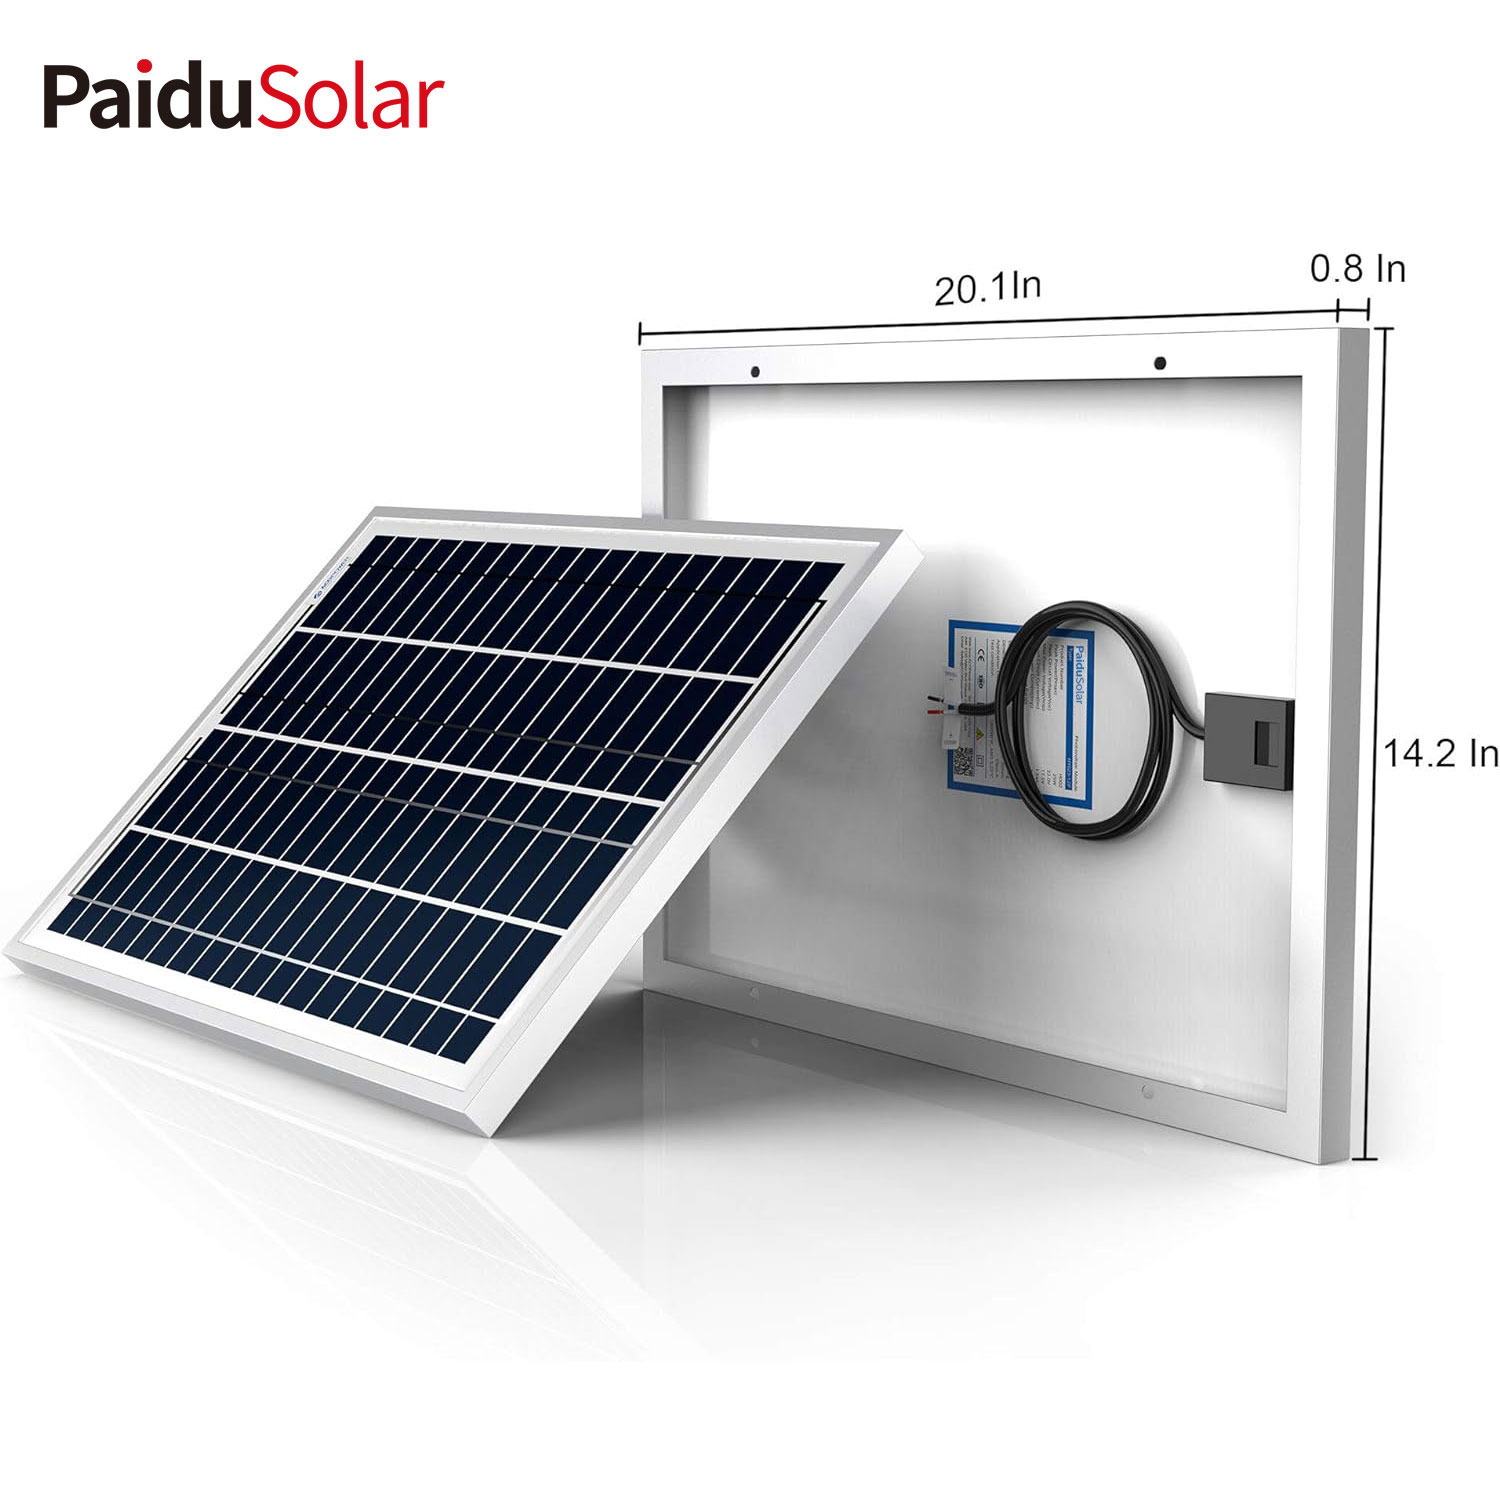 PaiduSolar 25W 12V Polycrystalline Solar Panel For Lighting Boat Gate Opener Chicken Coop